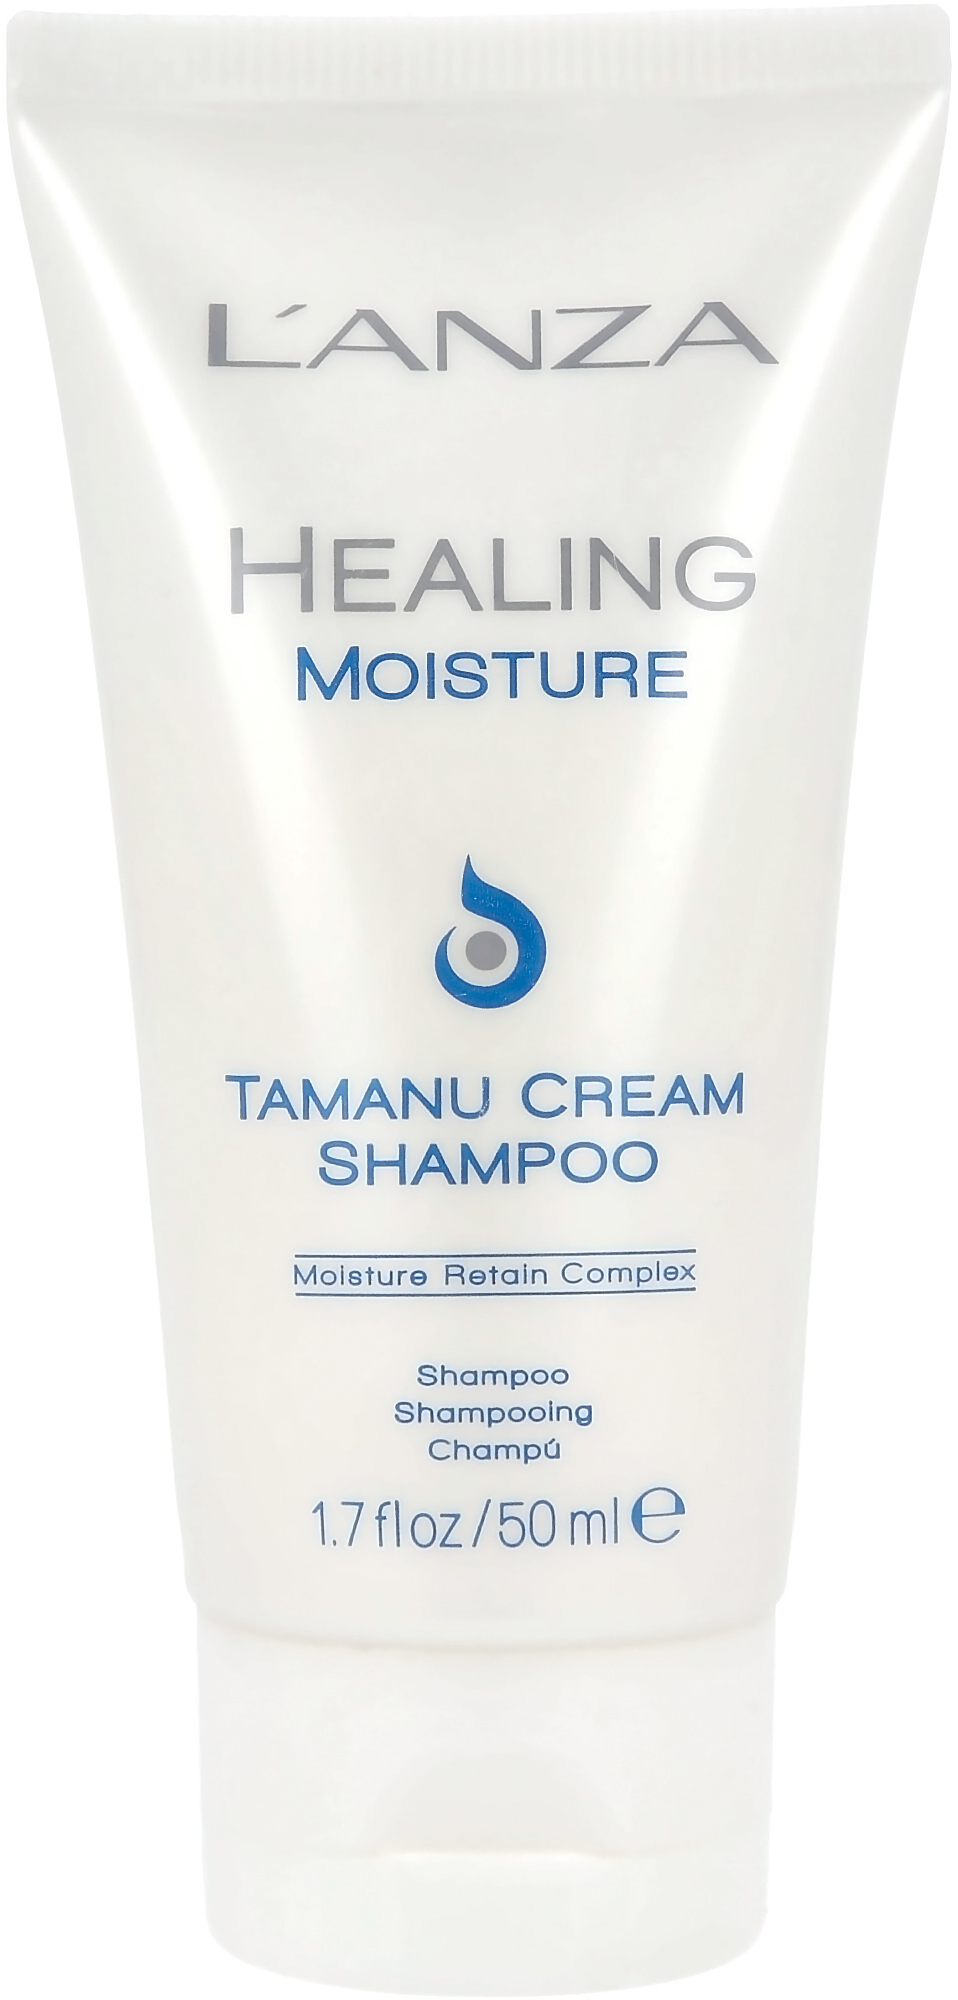 lanza-healing-moisture-tamanu-cream-shampoo-50ml